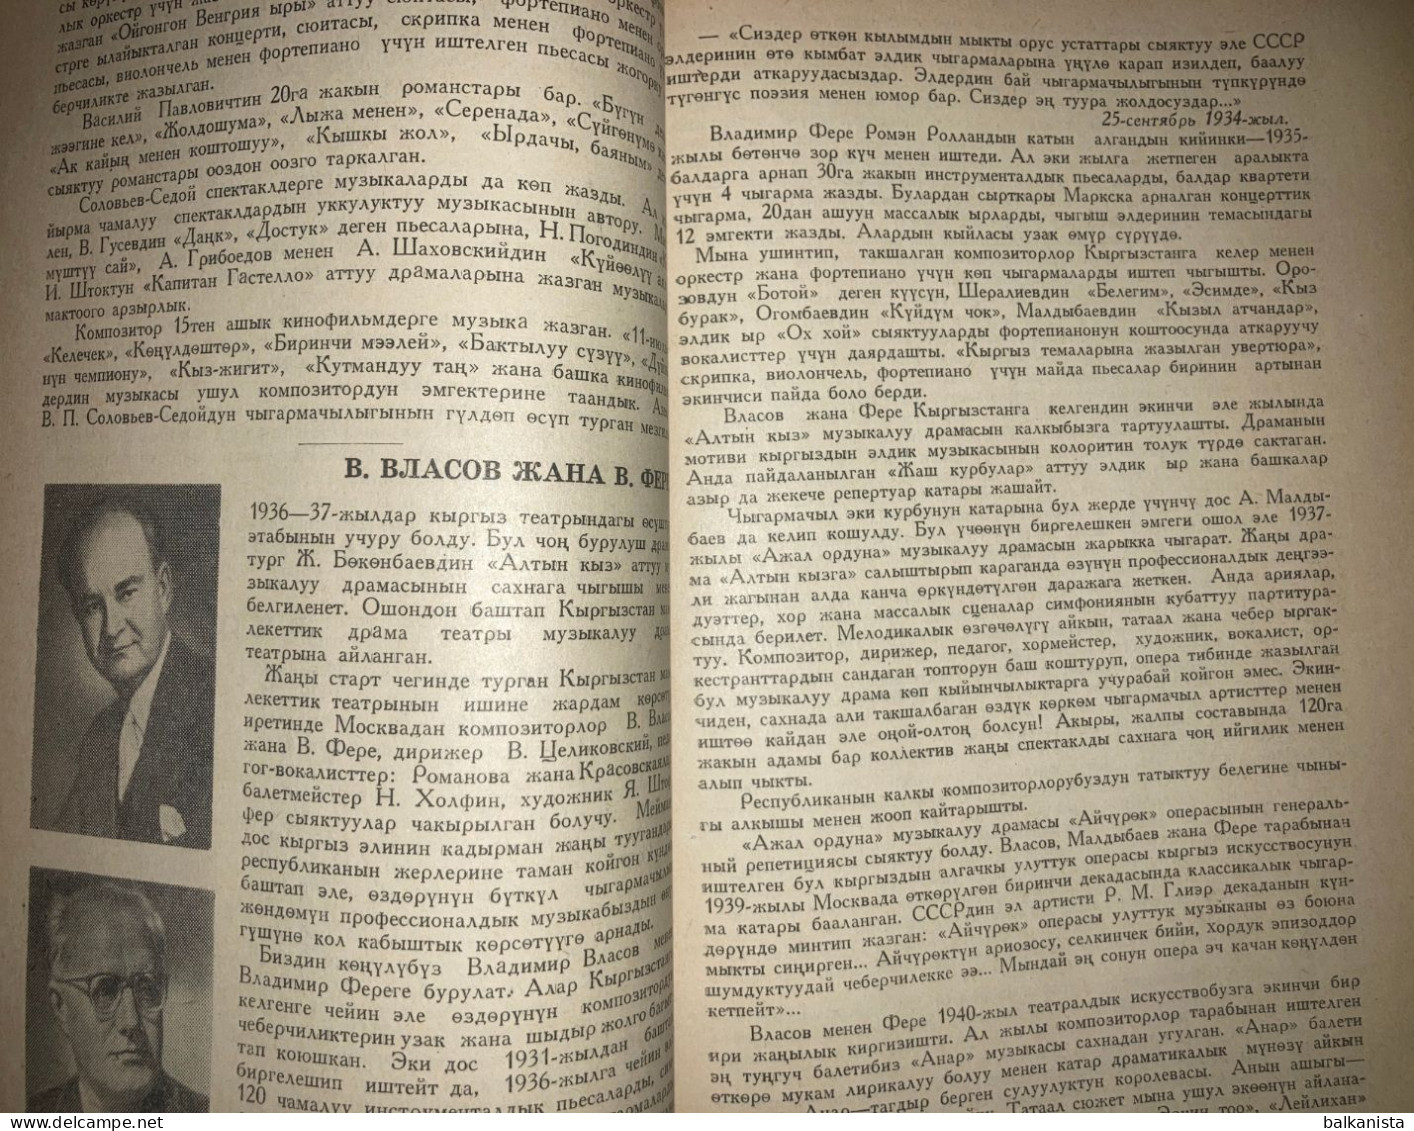 АЛА-ТОО Kyrgyzstan Ala - Too Literature Magazine 1963 No: 6 - Zeitungen & Zeitschriften